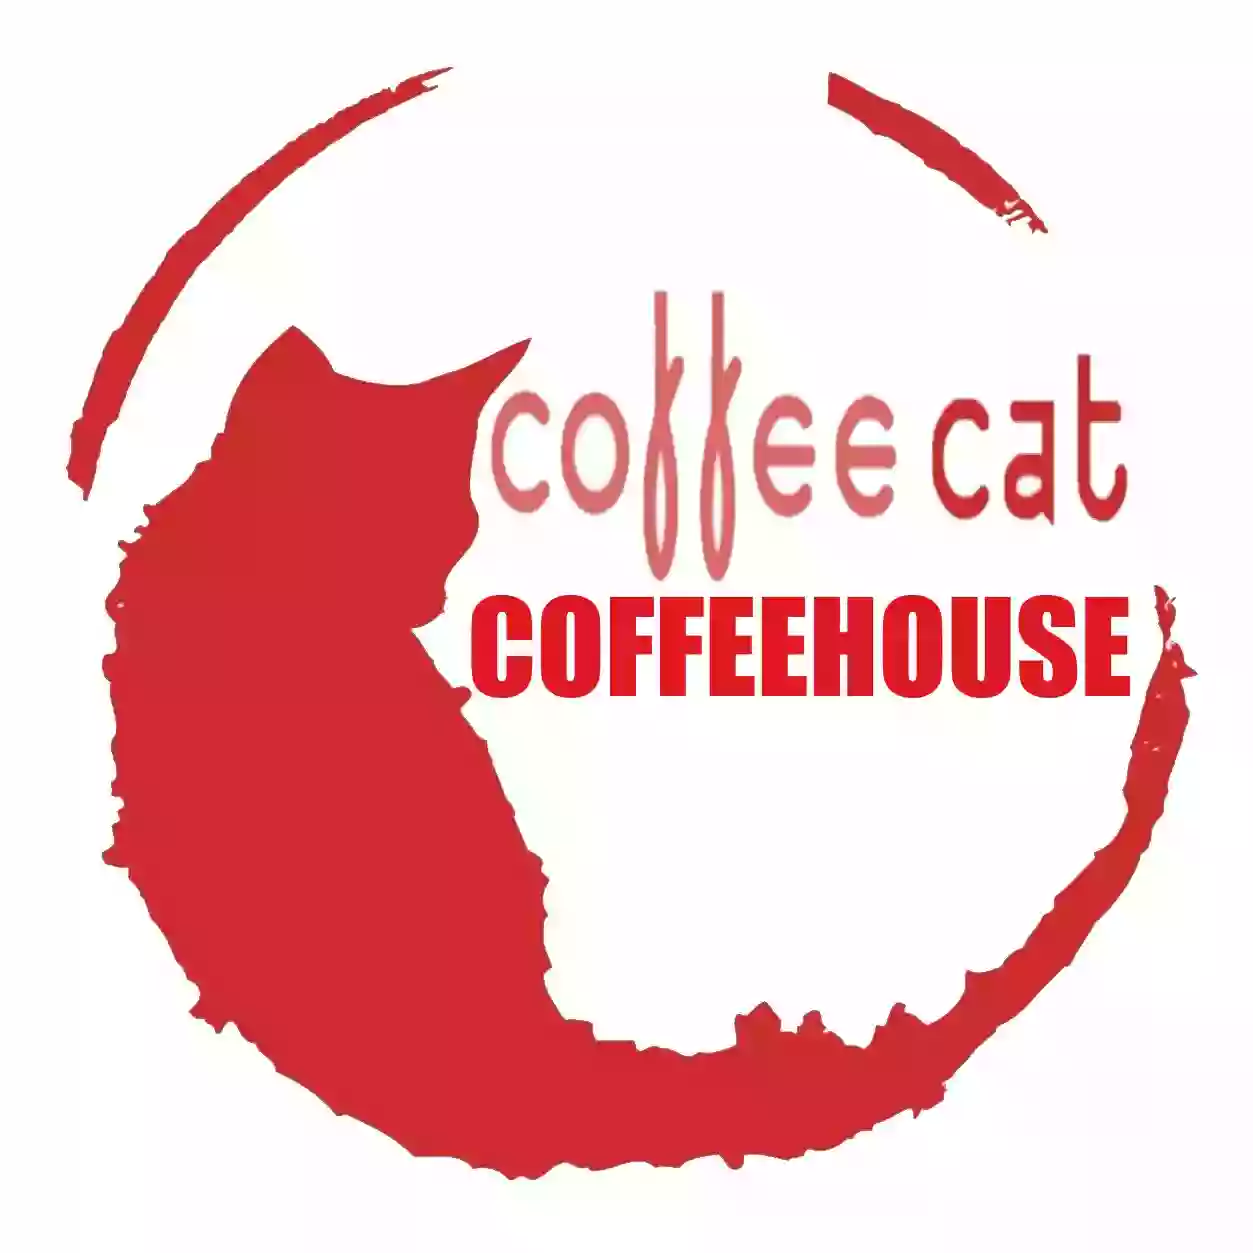 Coffee Cat Coffeehouse